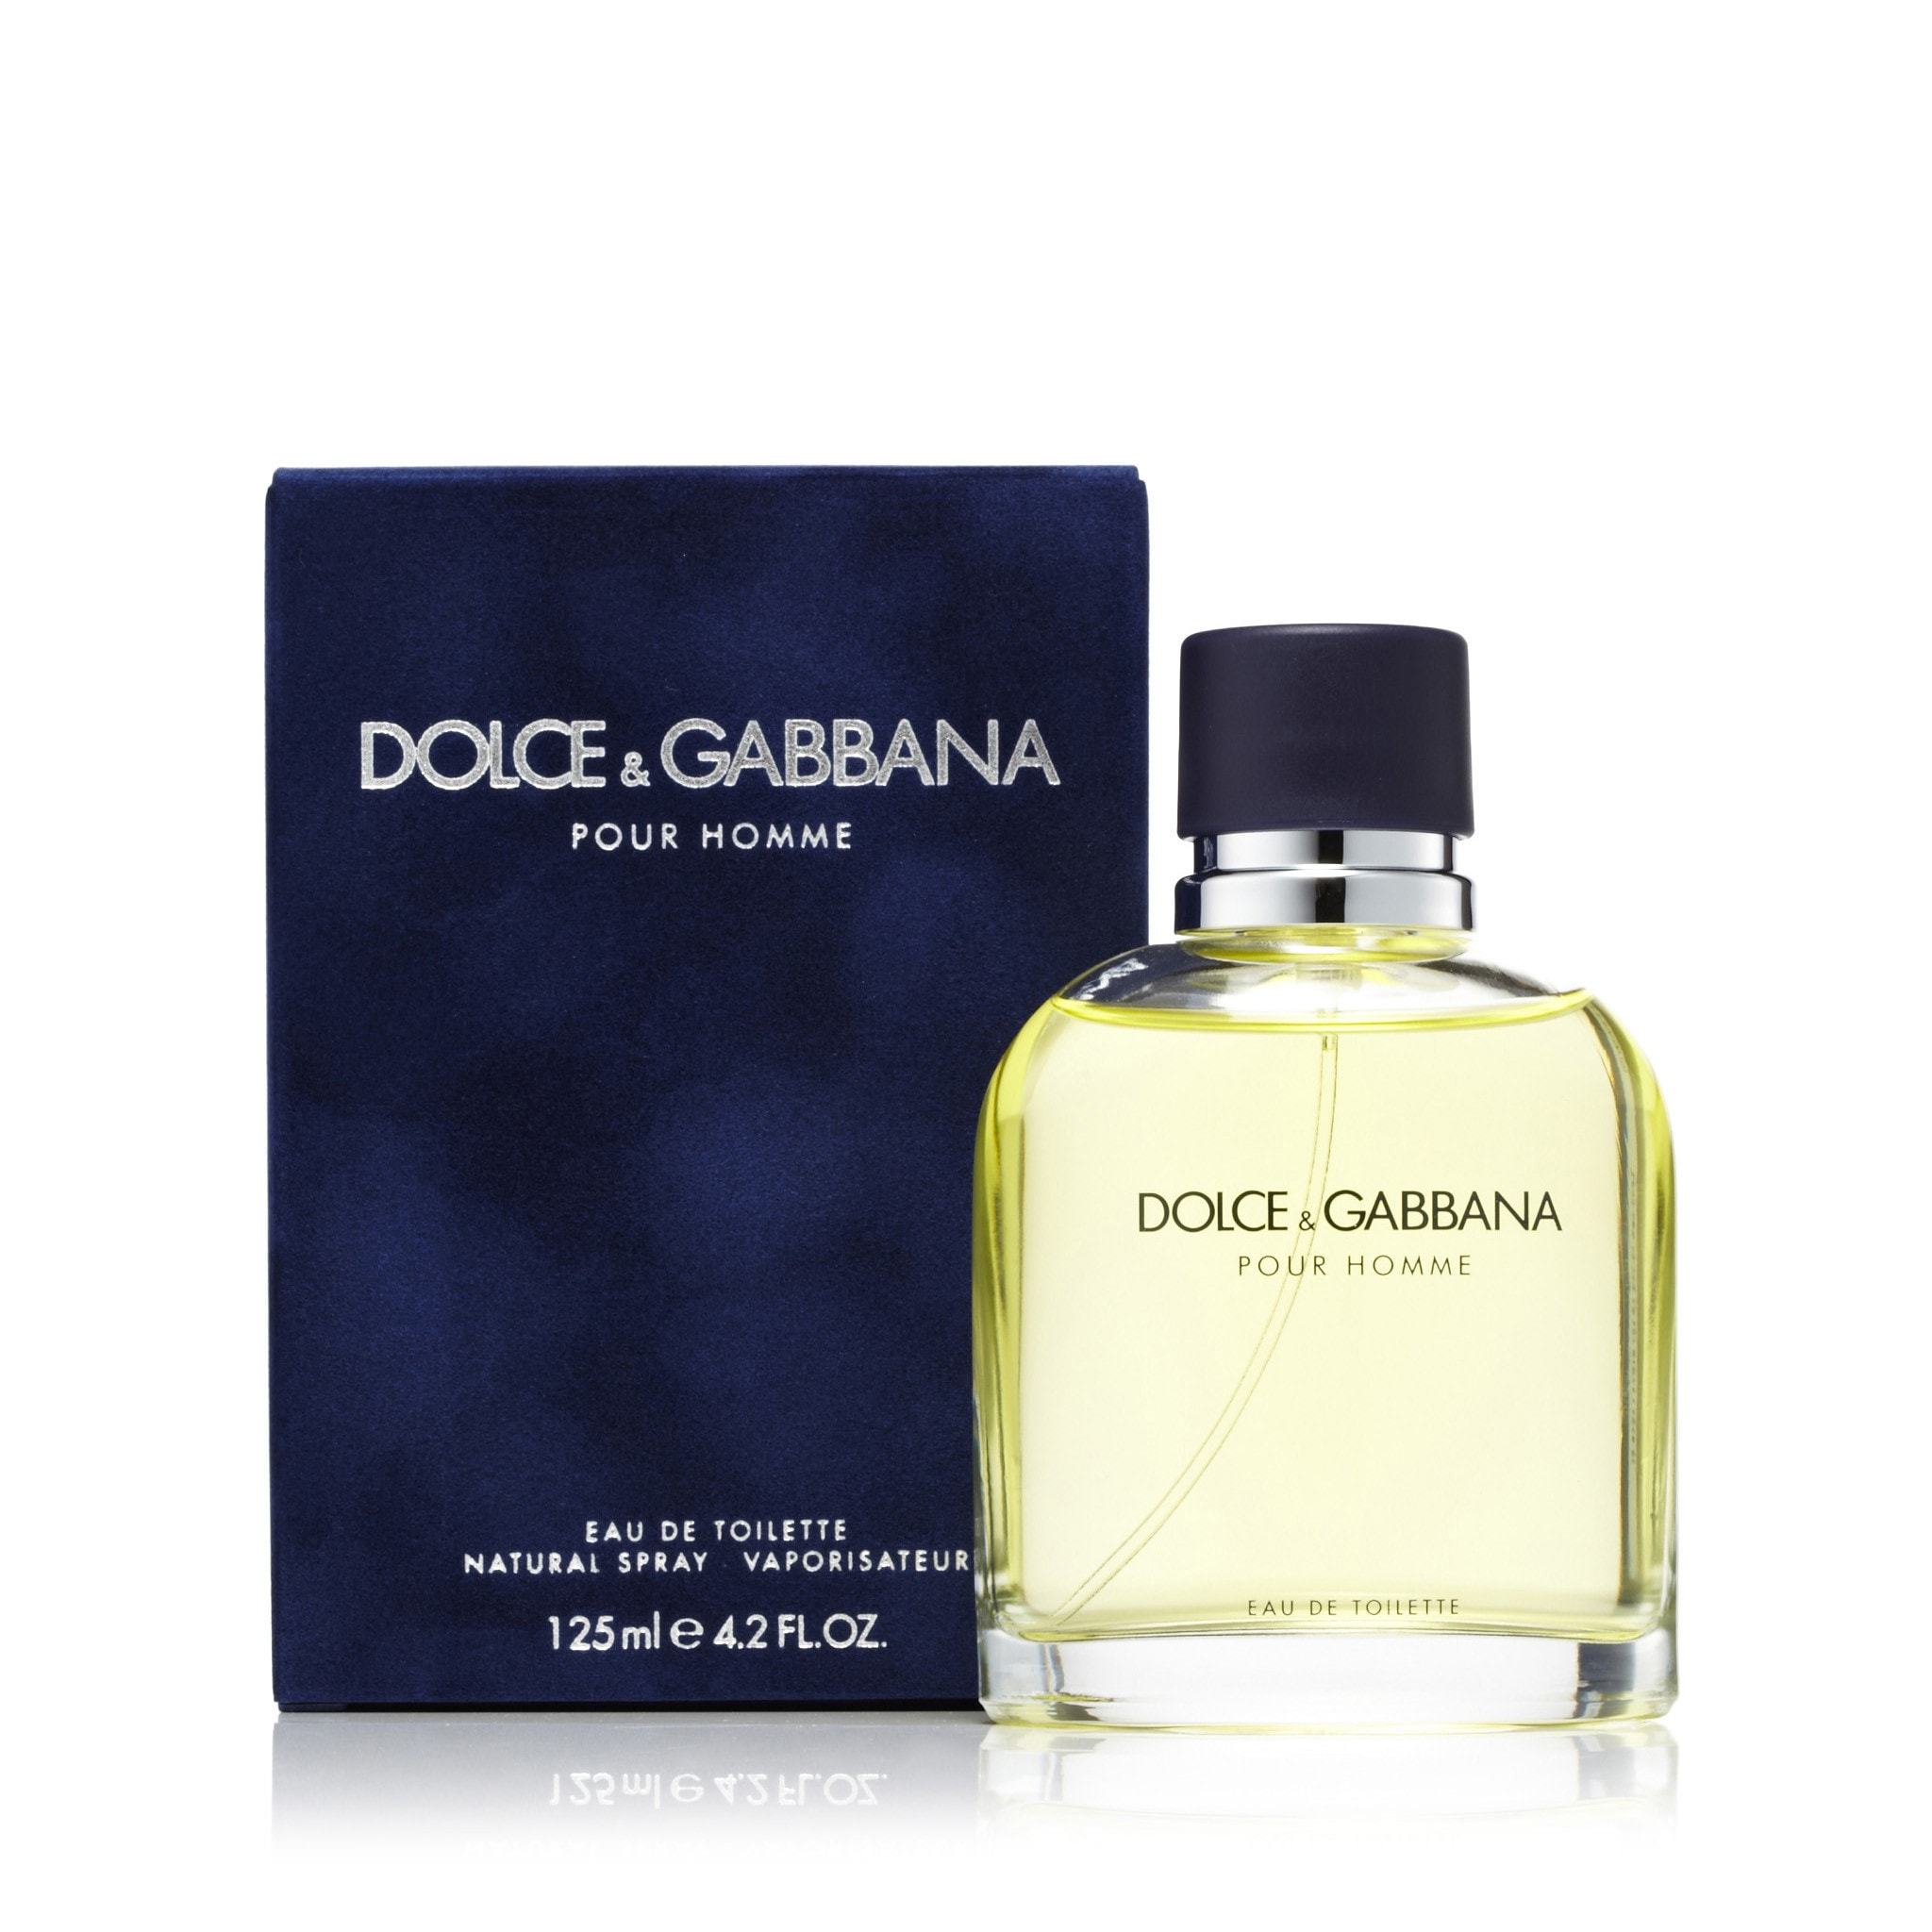 Light Blue Eau de Toilette Spray by Dolce & Gabbana 4.2 oz